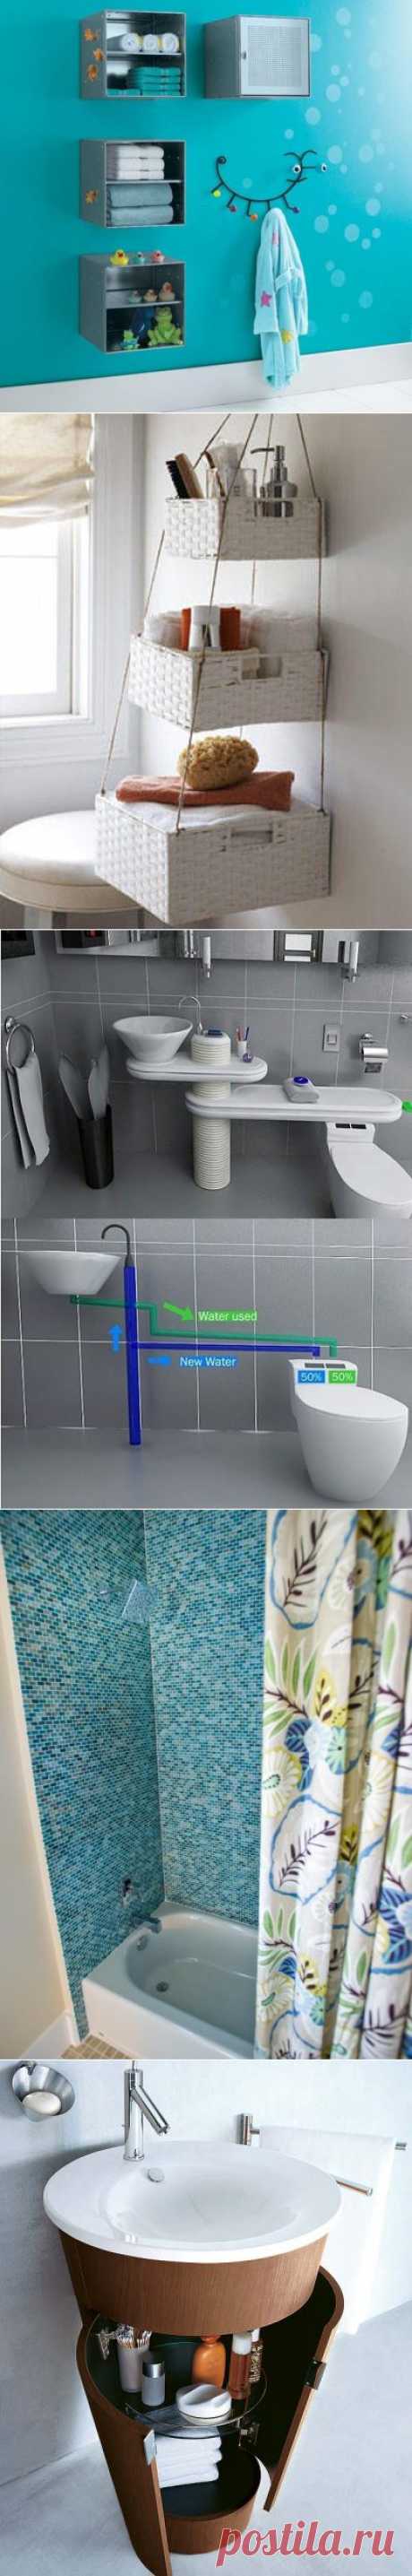 17 Useful ideas for small bathrooms